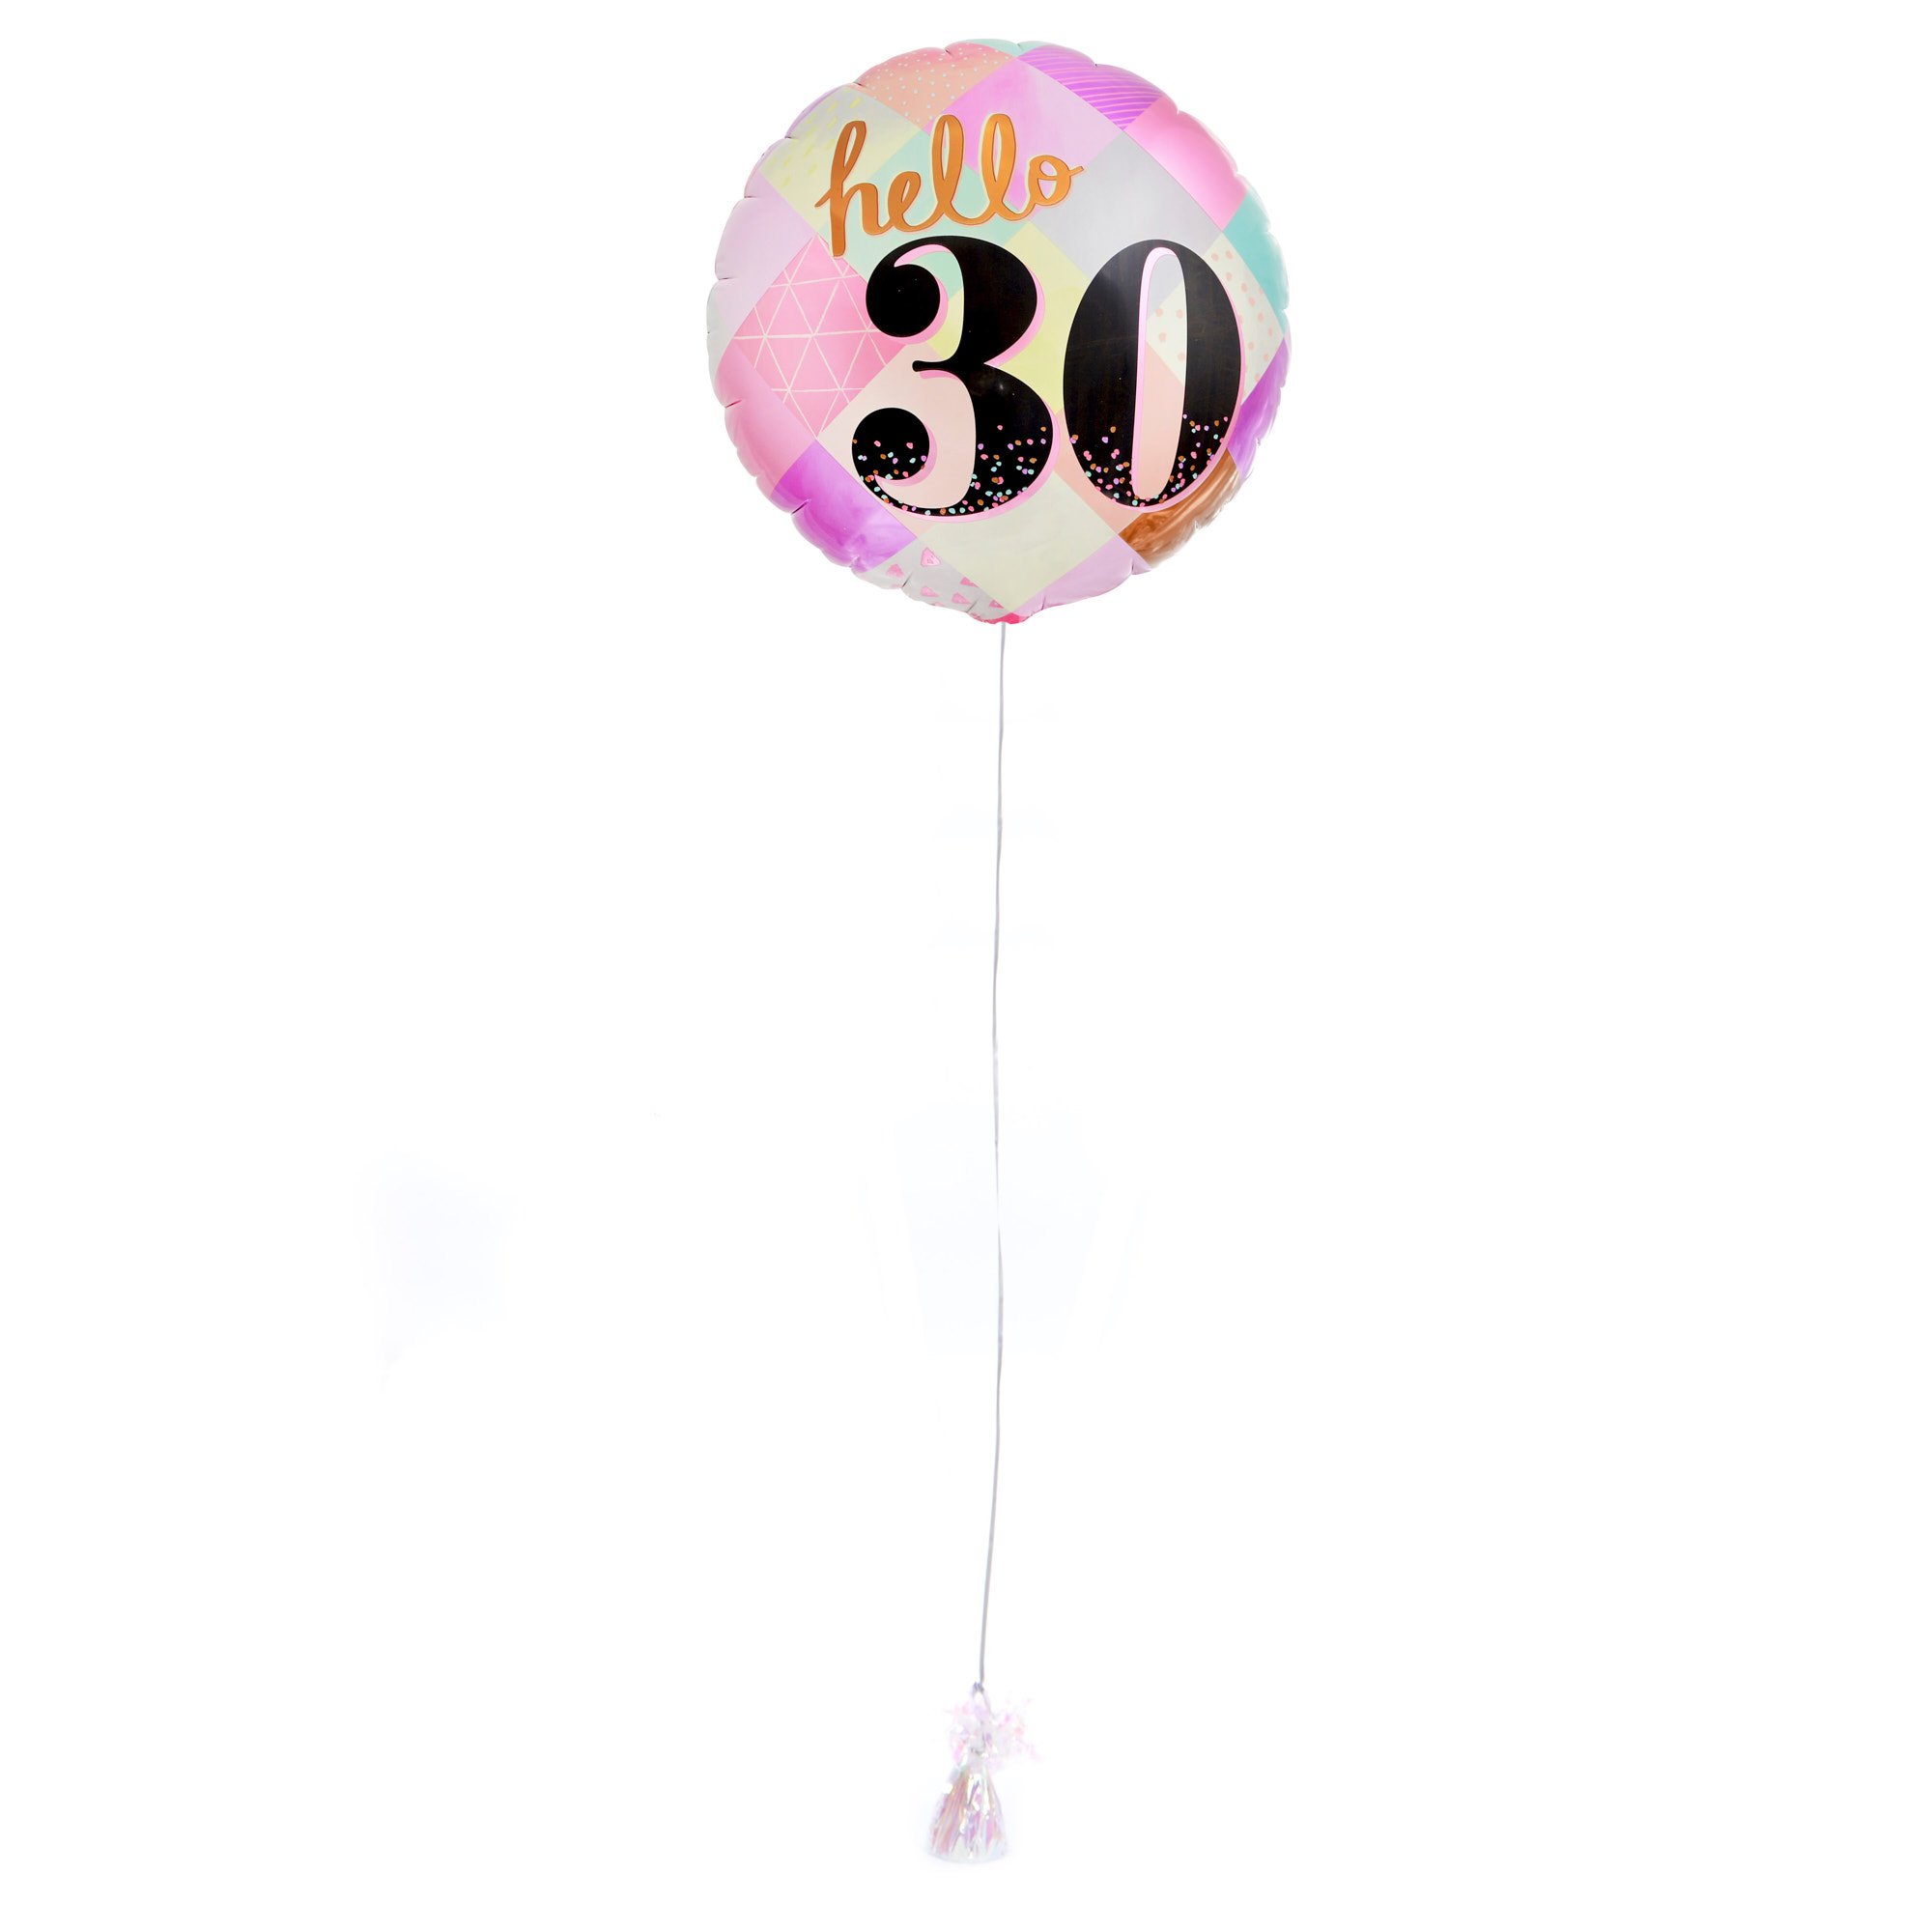 Hello 30th Birthday Balloon & Lindt Chocolates - FREE GIFT CARD!